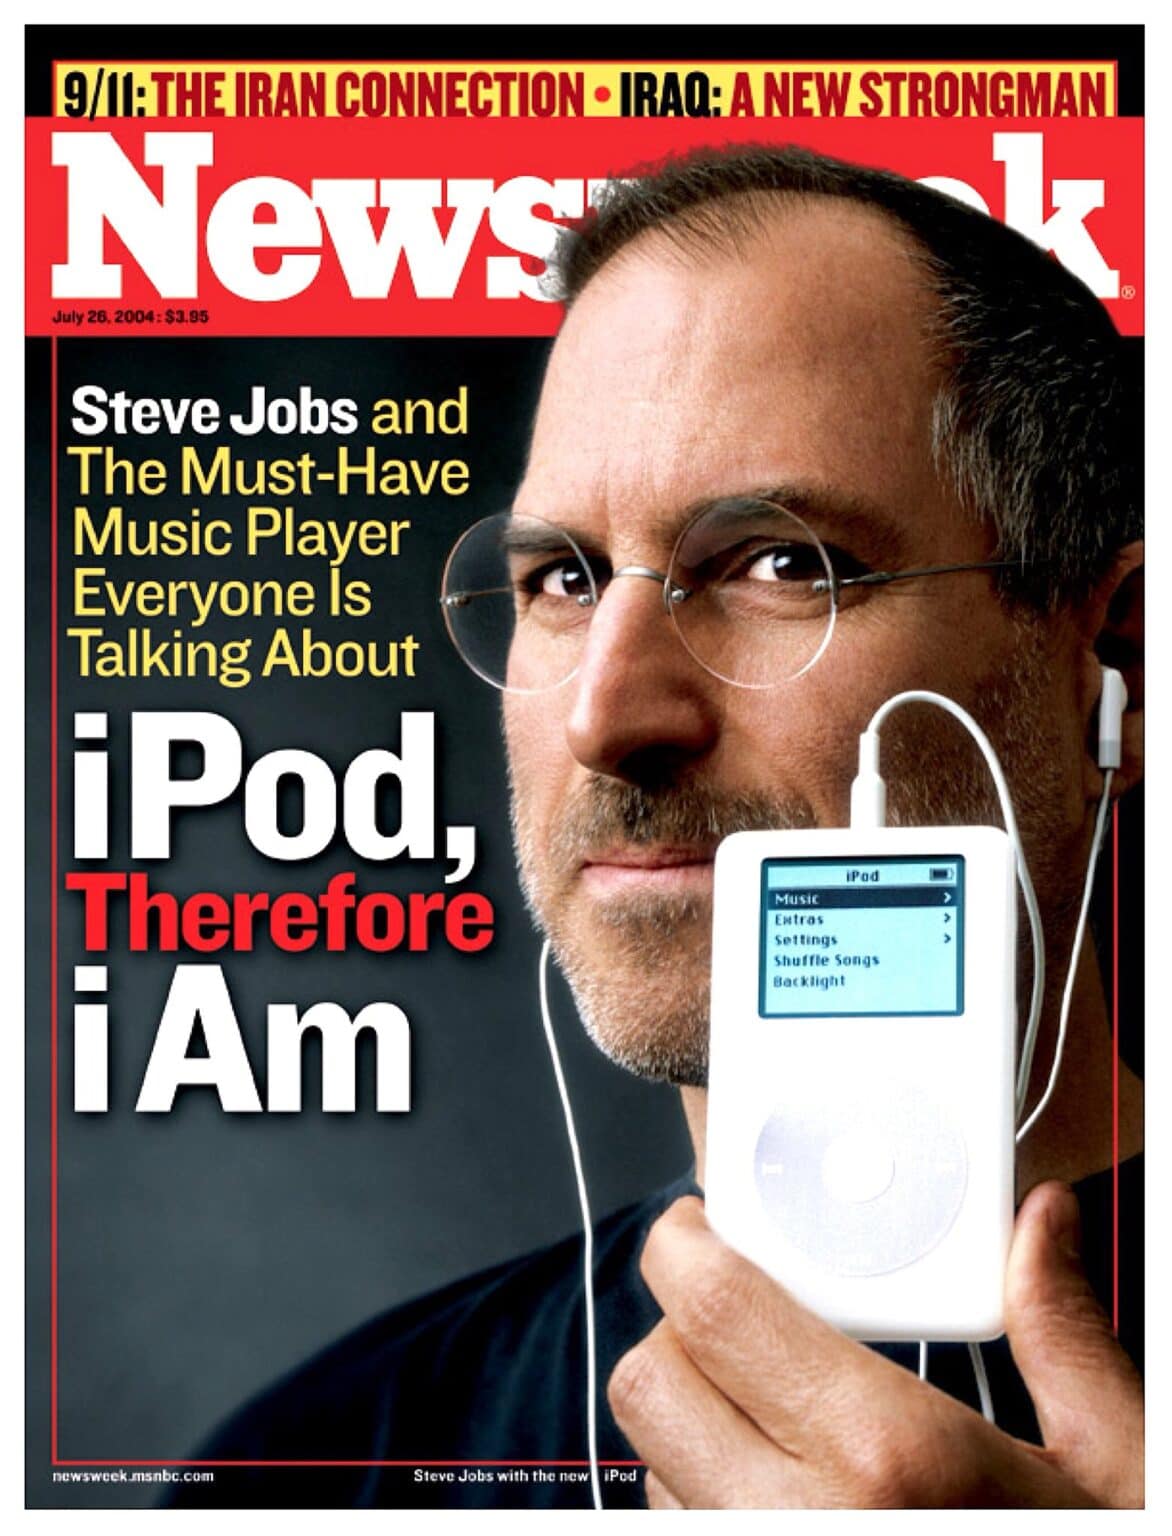 Steve Jobs on the cover of NewsWeek